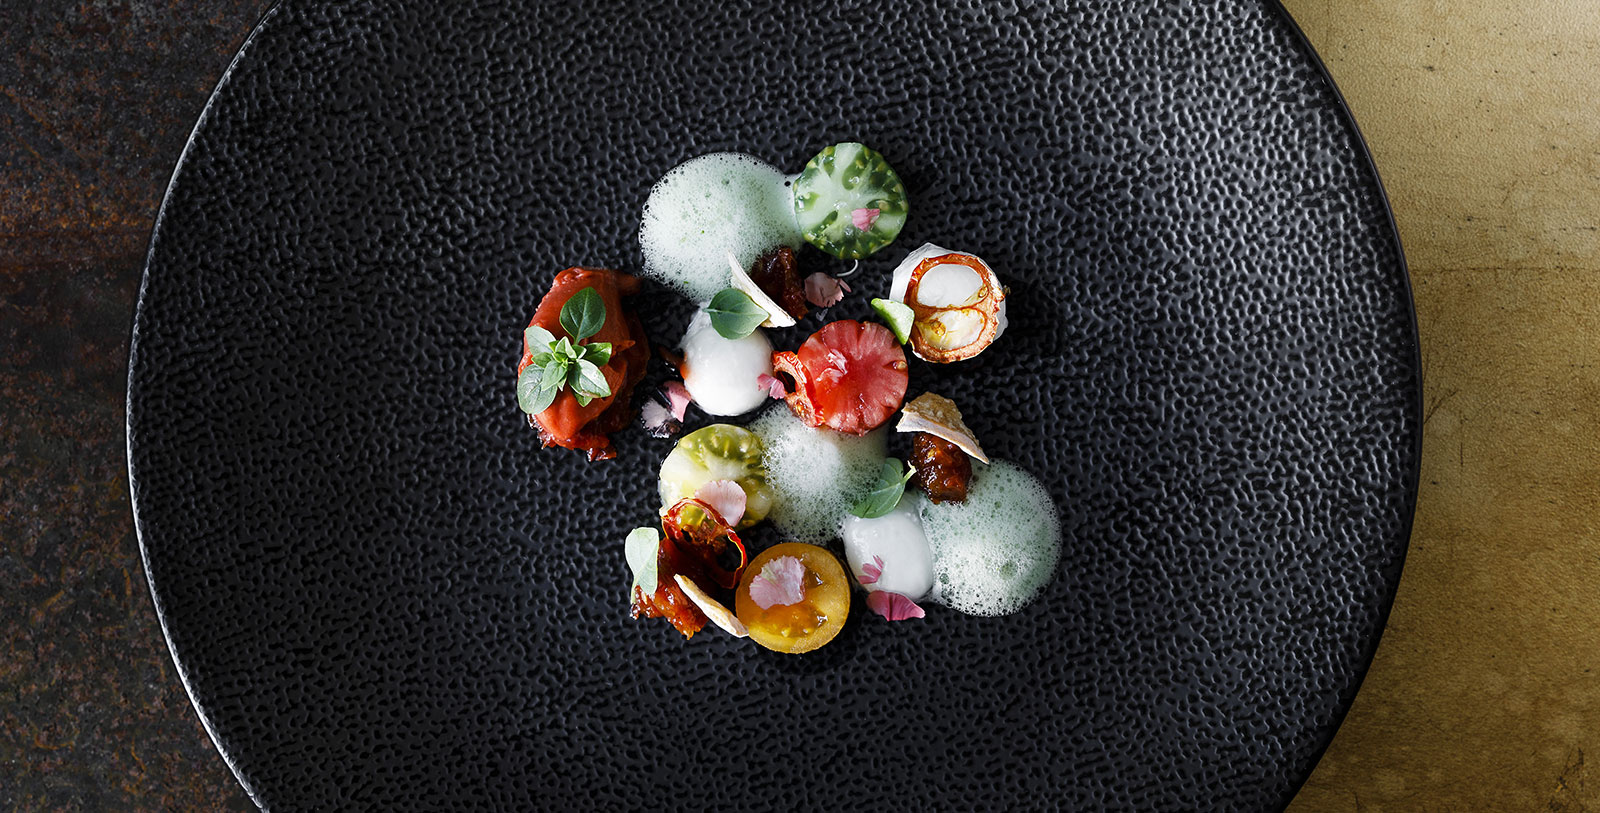 Taste the creative culinary masterpieces at Sartory, the hotel's Michelin star award-winning restaurant.